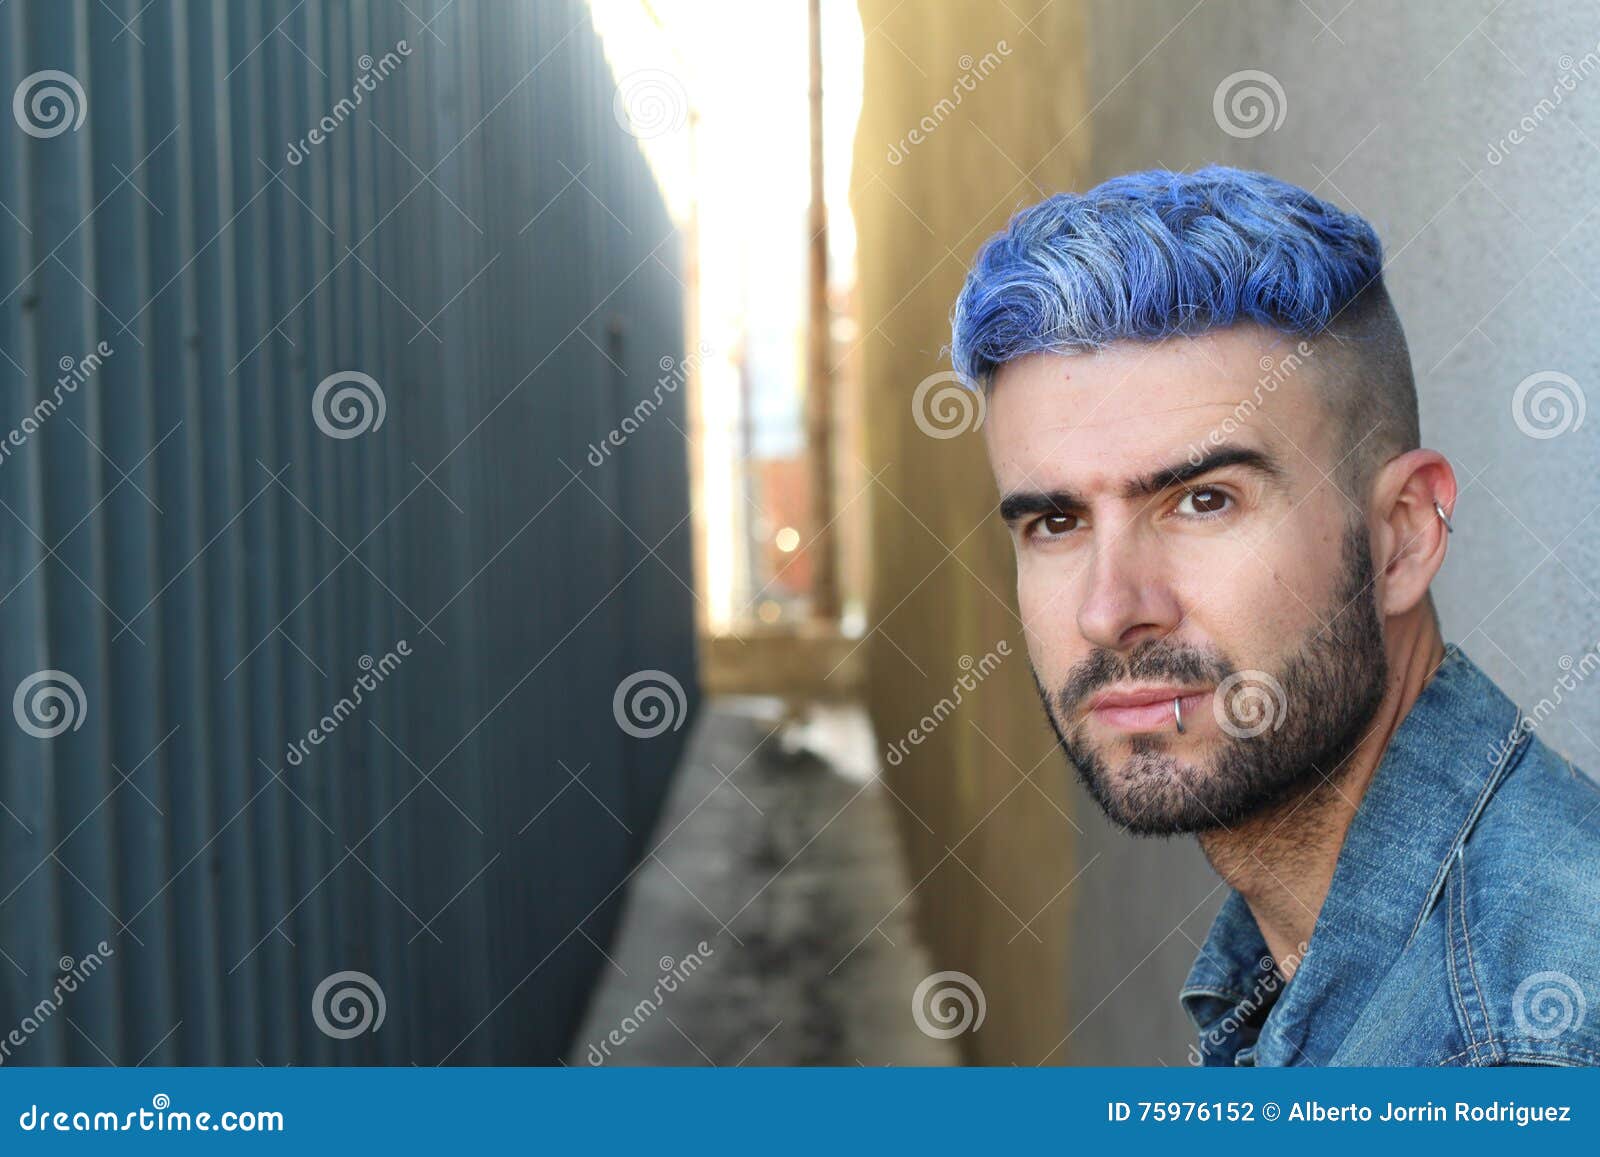 denim blue hair men